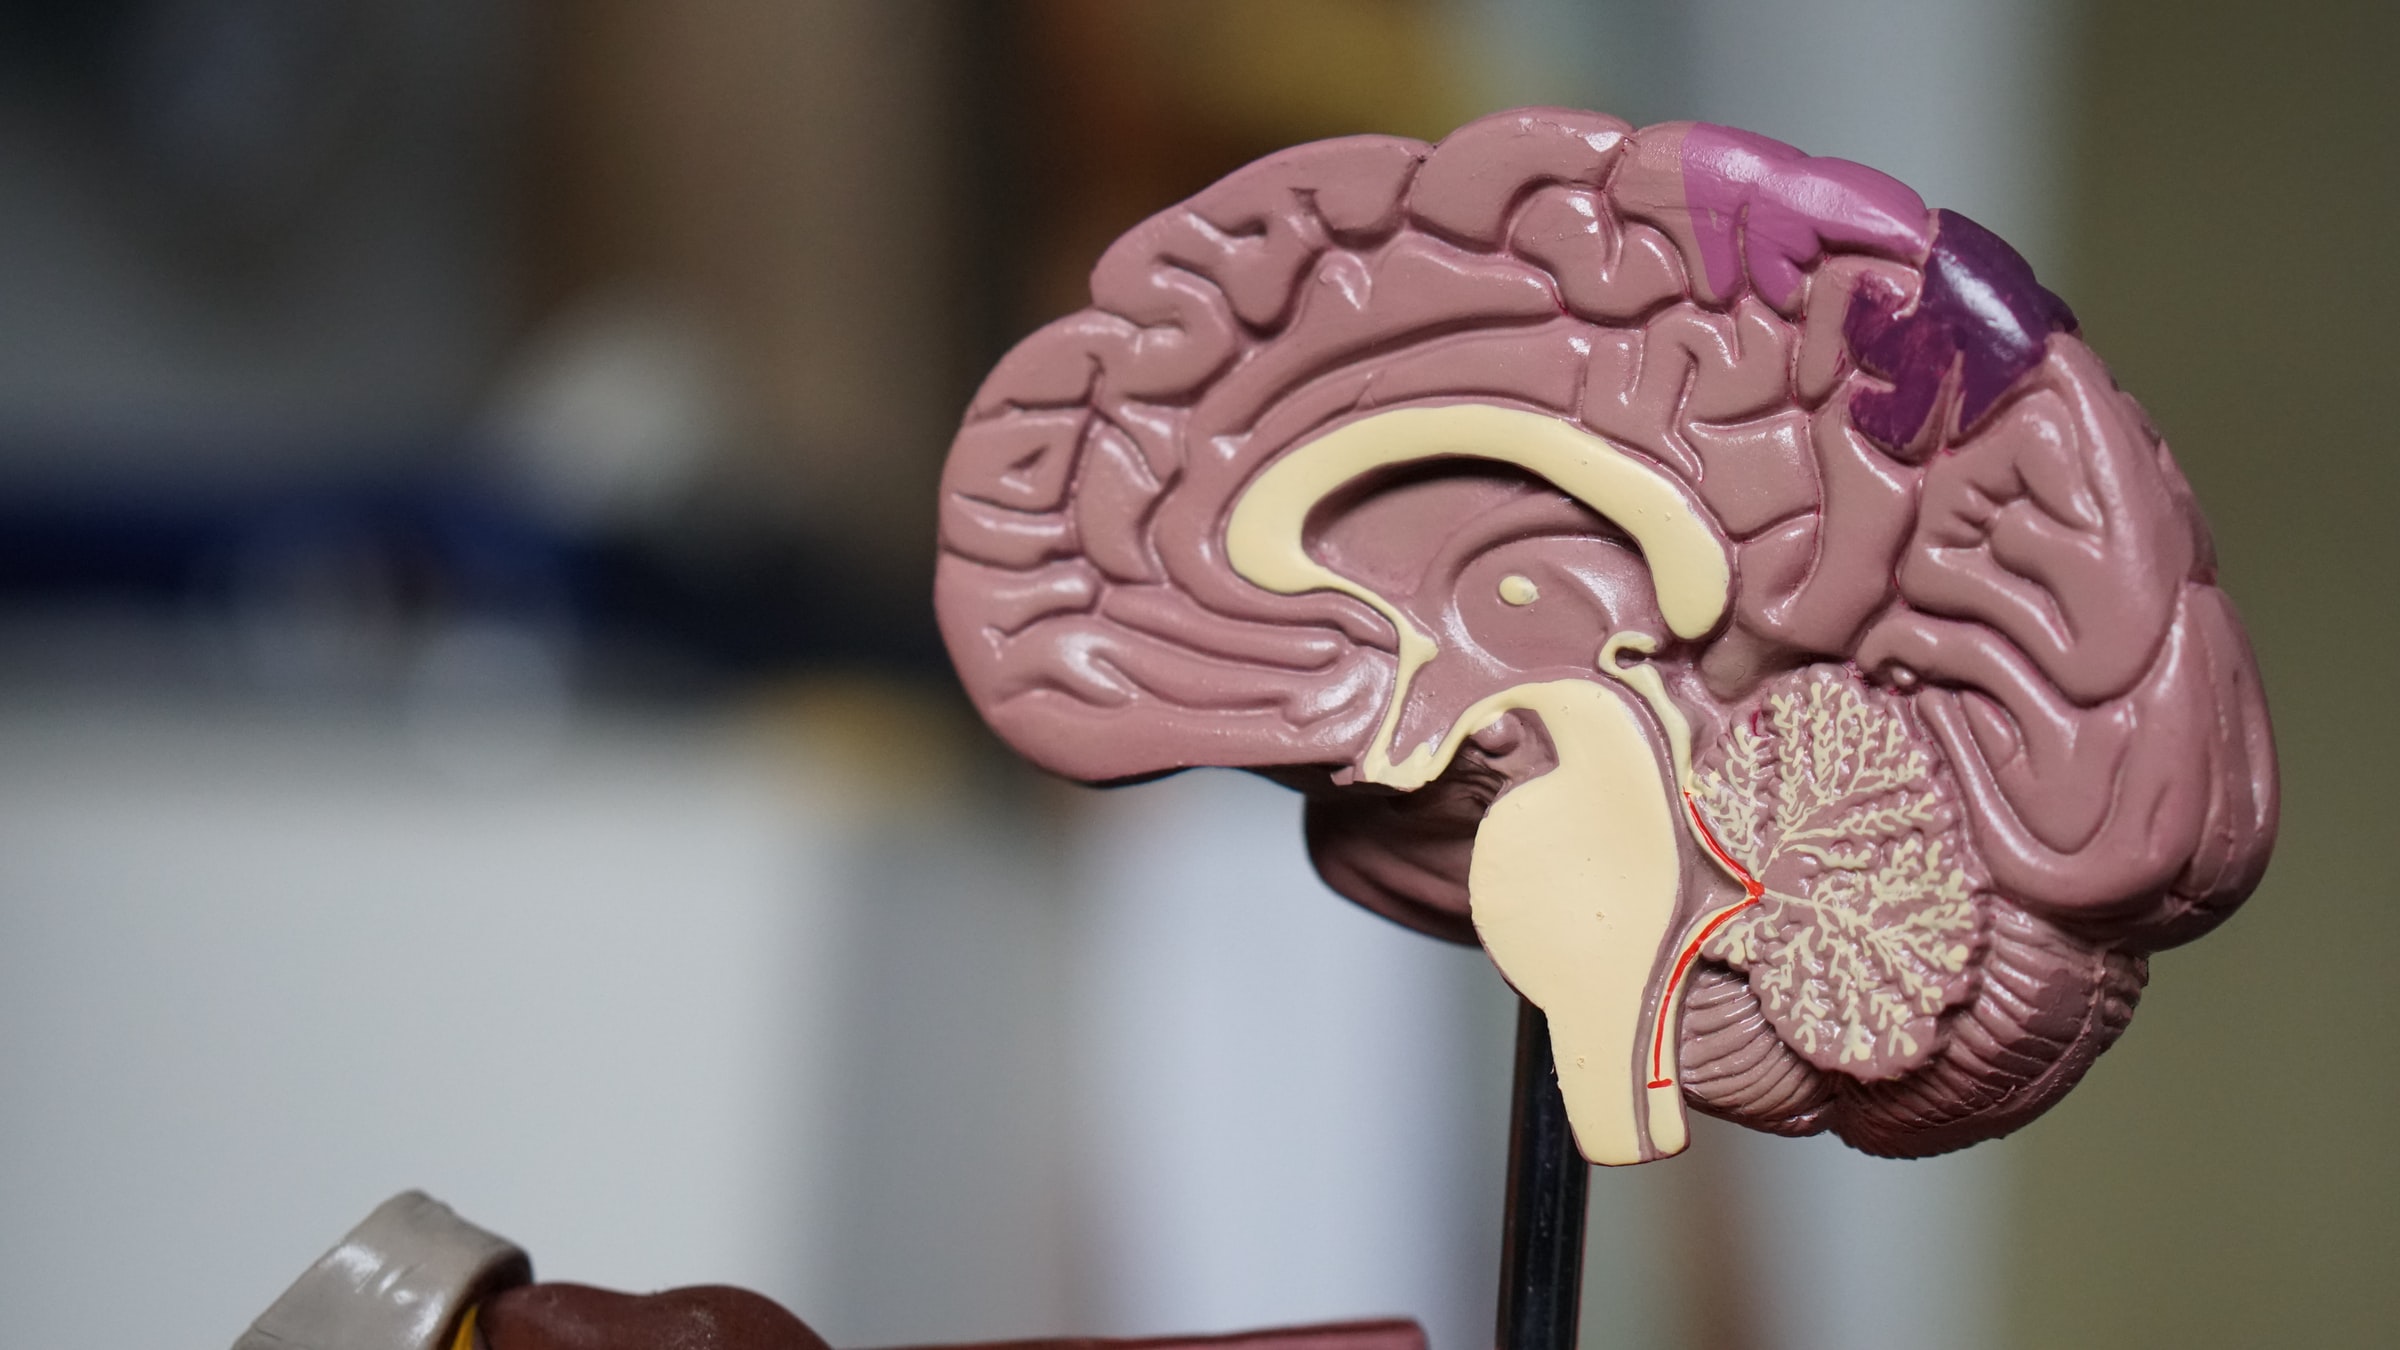 Alpha Brain - A Premium Brain Supplement For Improving Memory And Focus